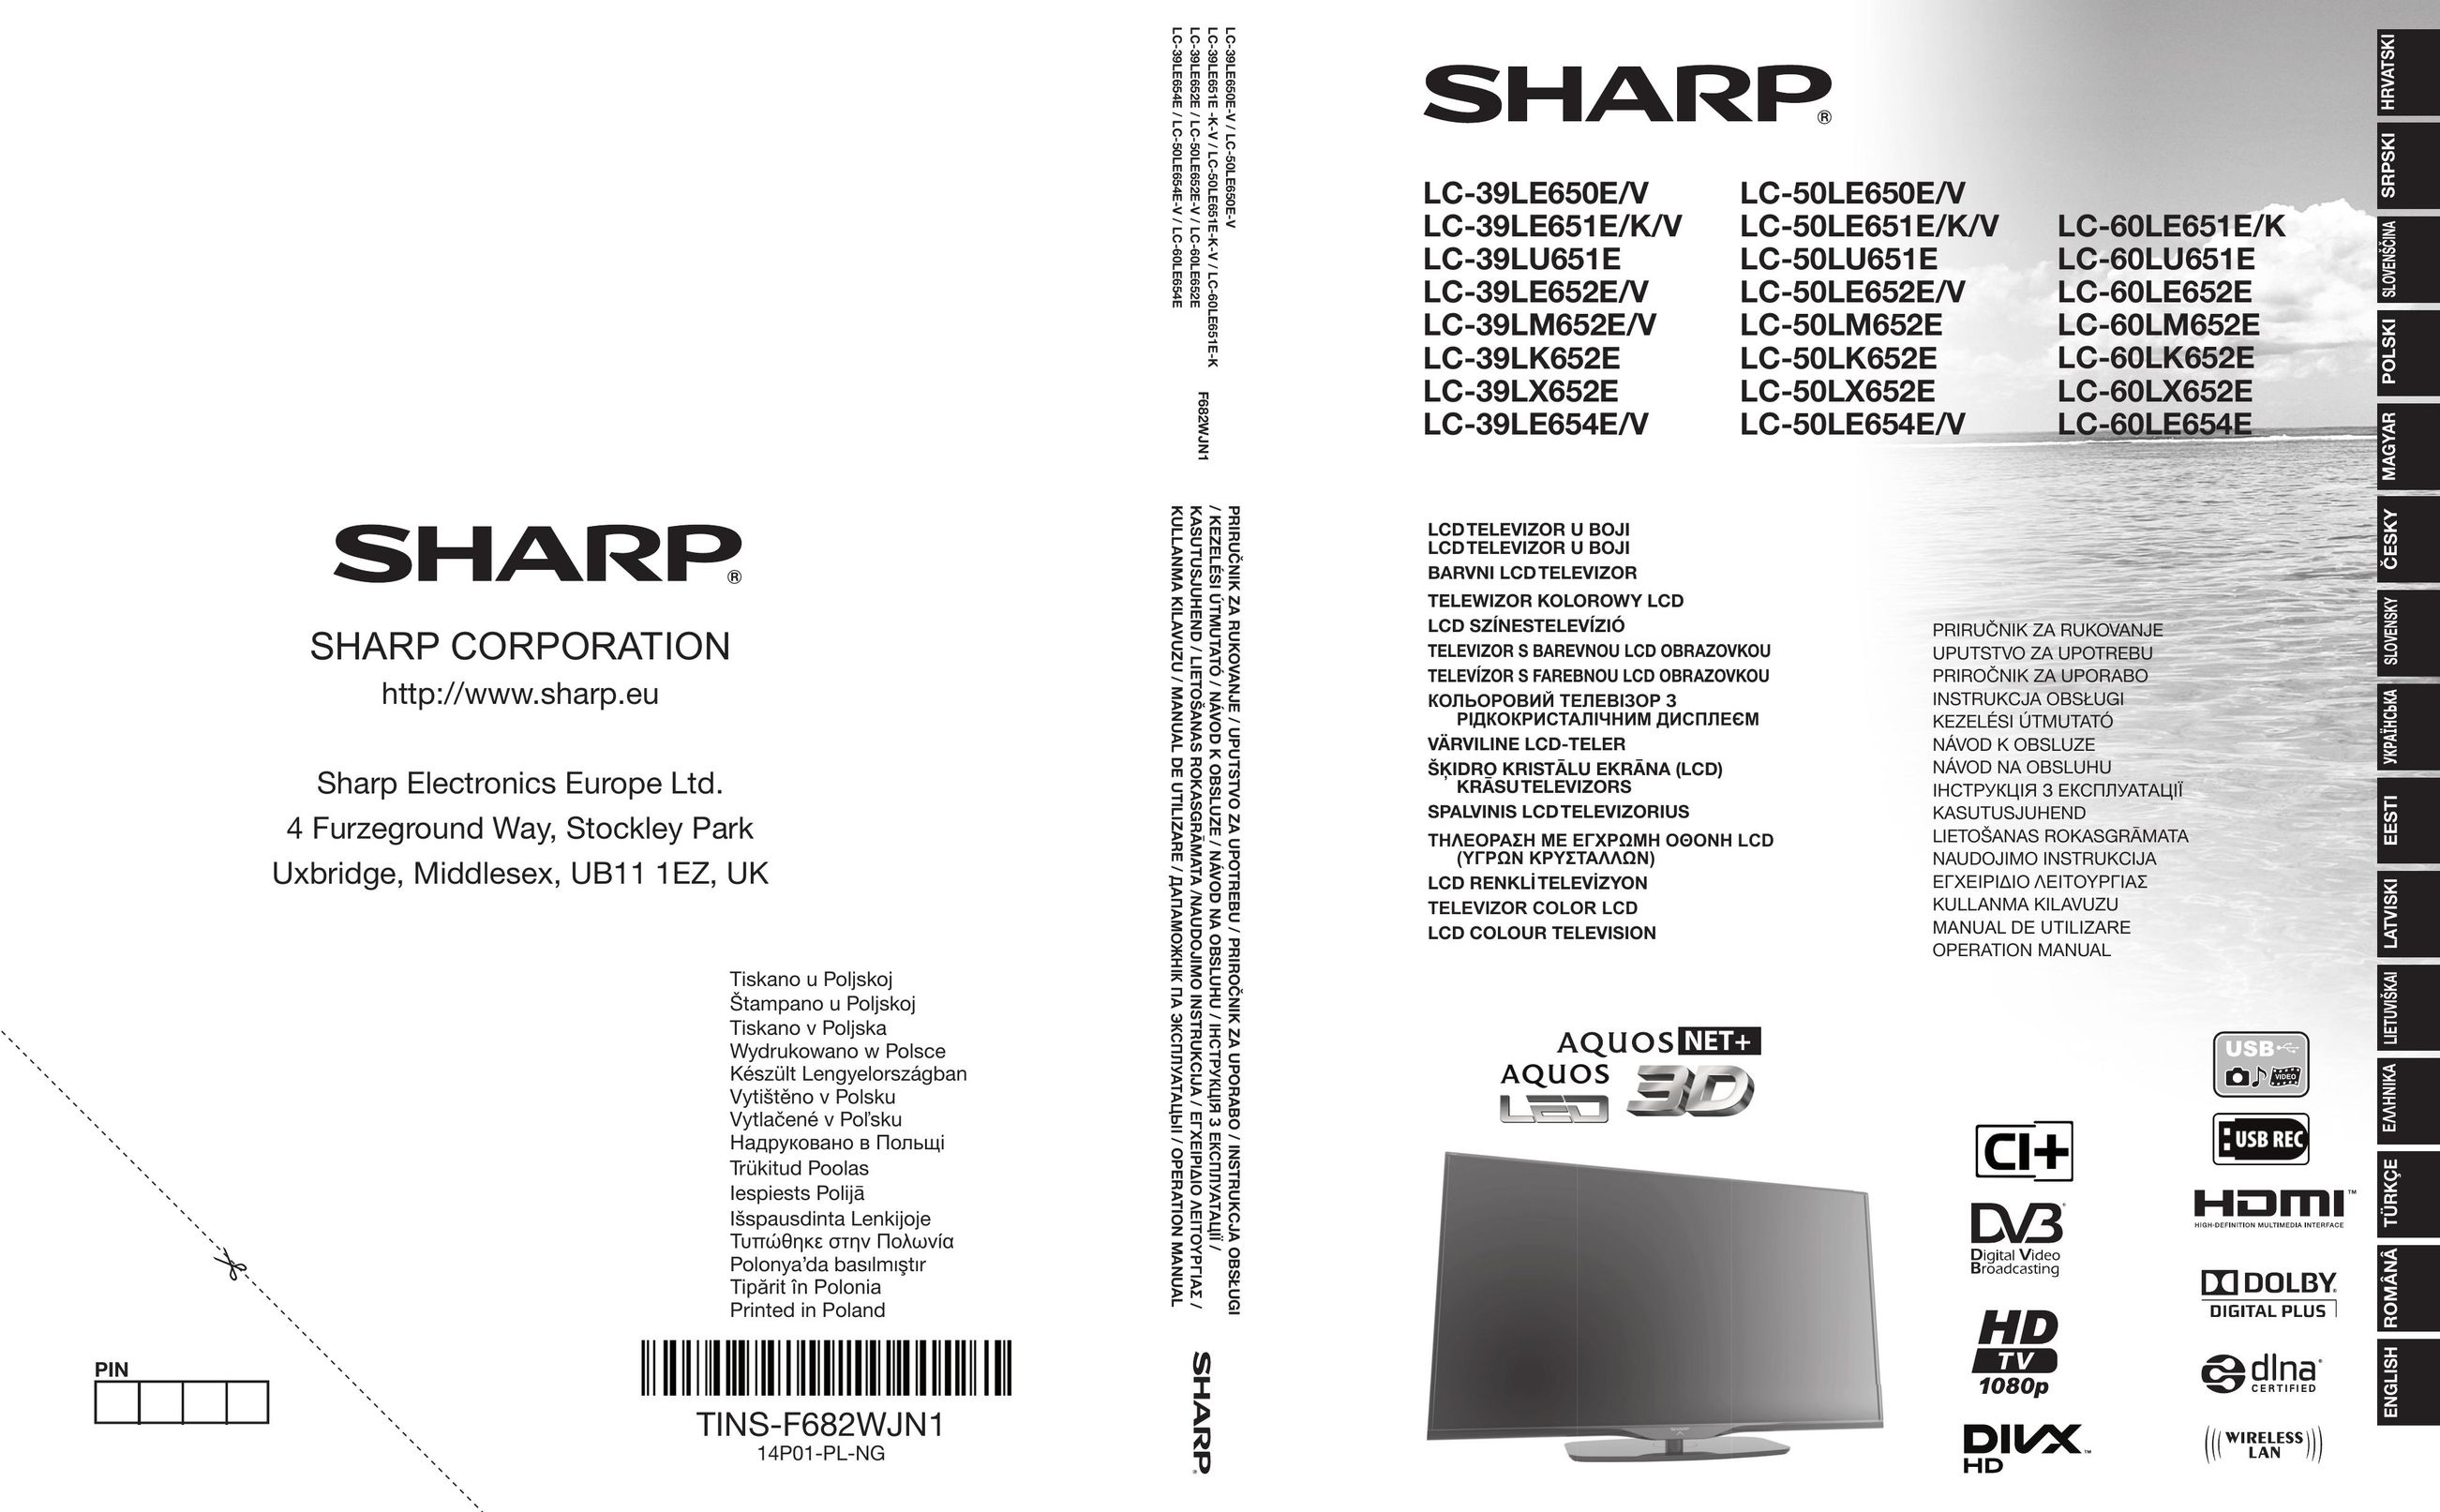 Sharp LC-39LM652E/V Car Video System User Manual